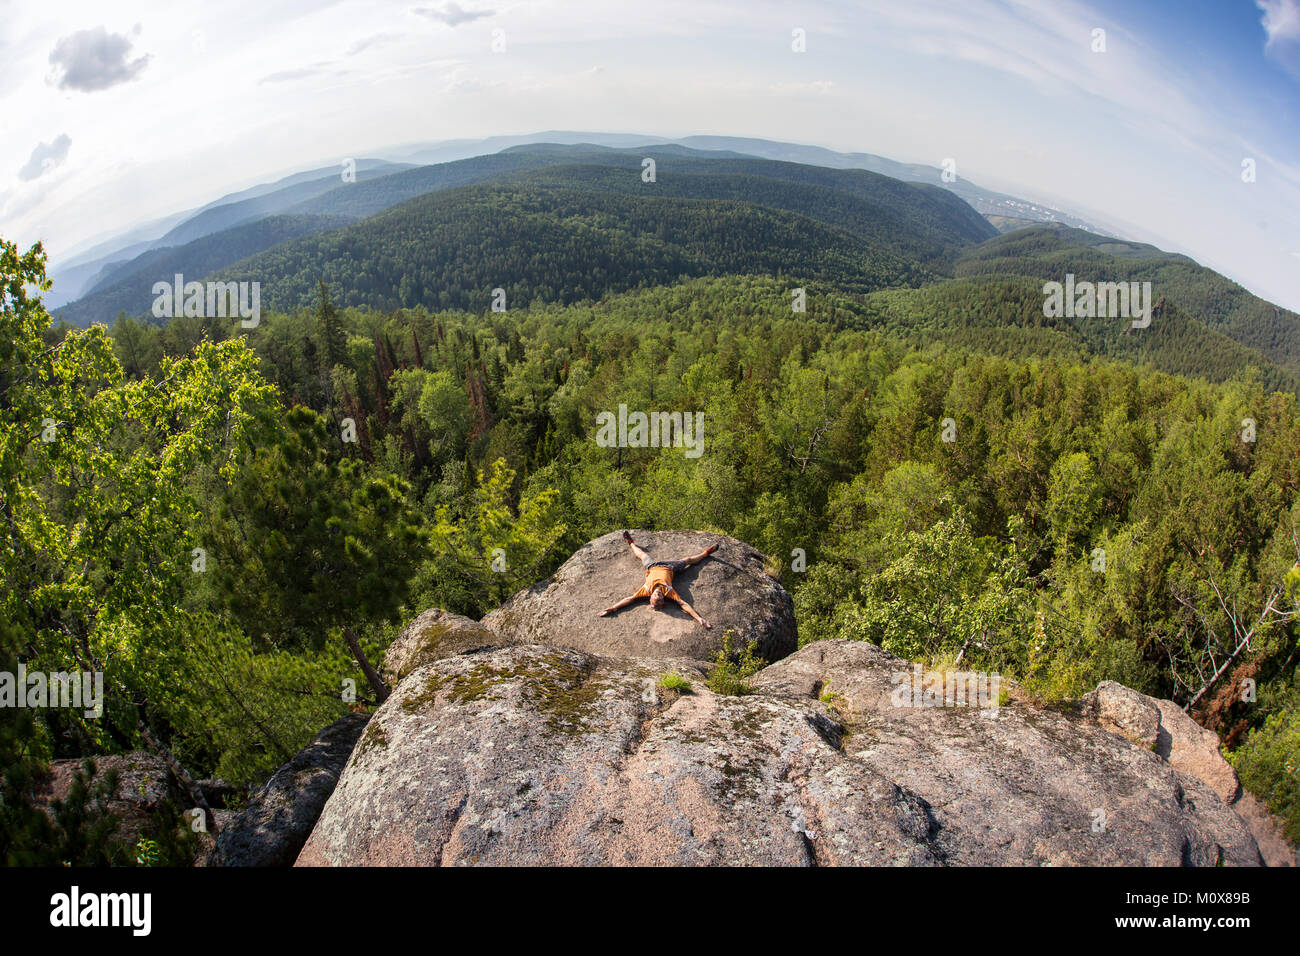 Hombre meditando sobre una roca Foto de stock